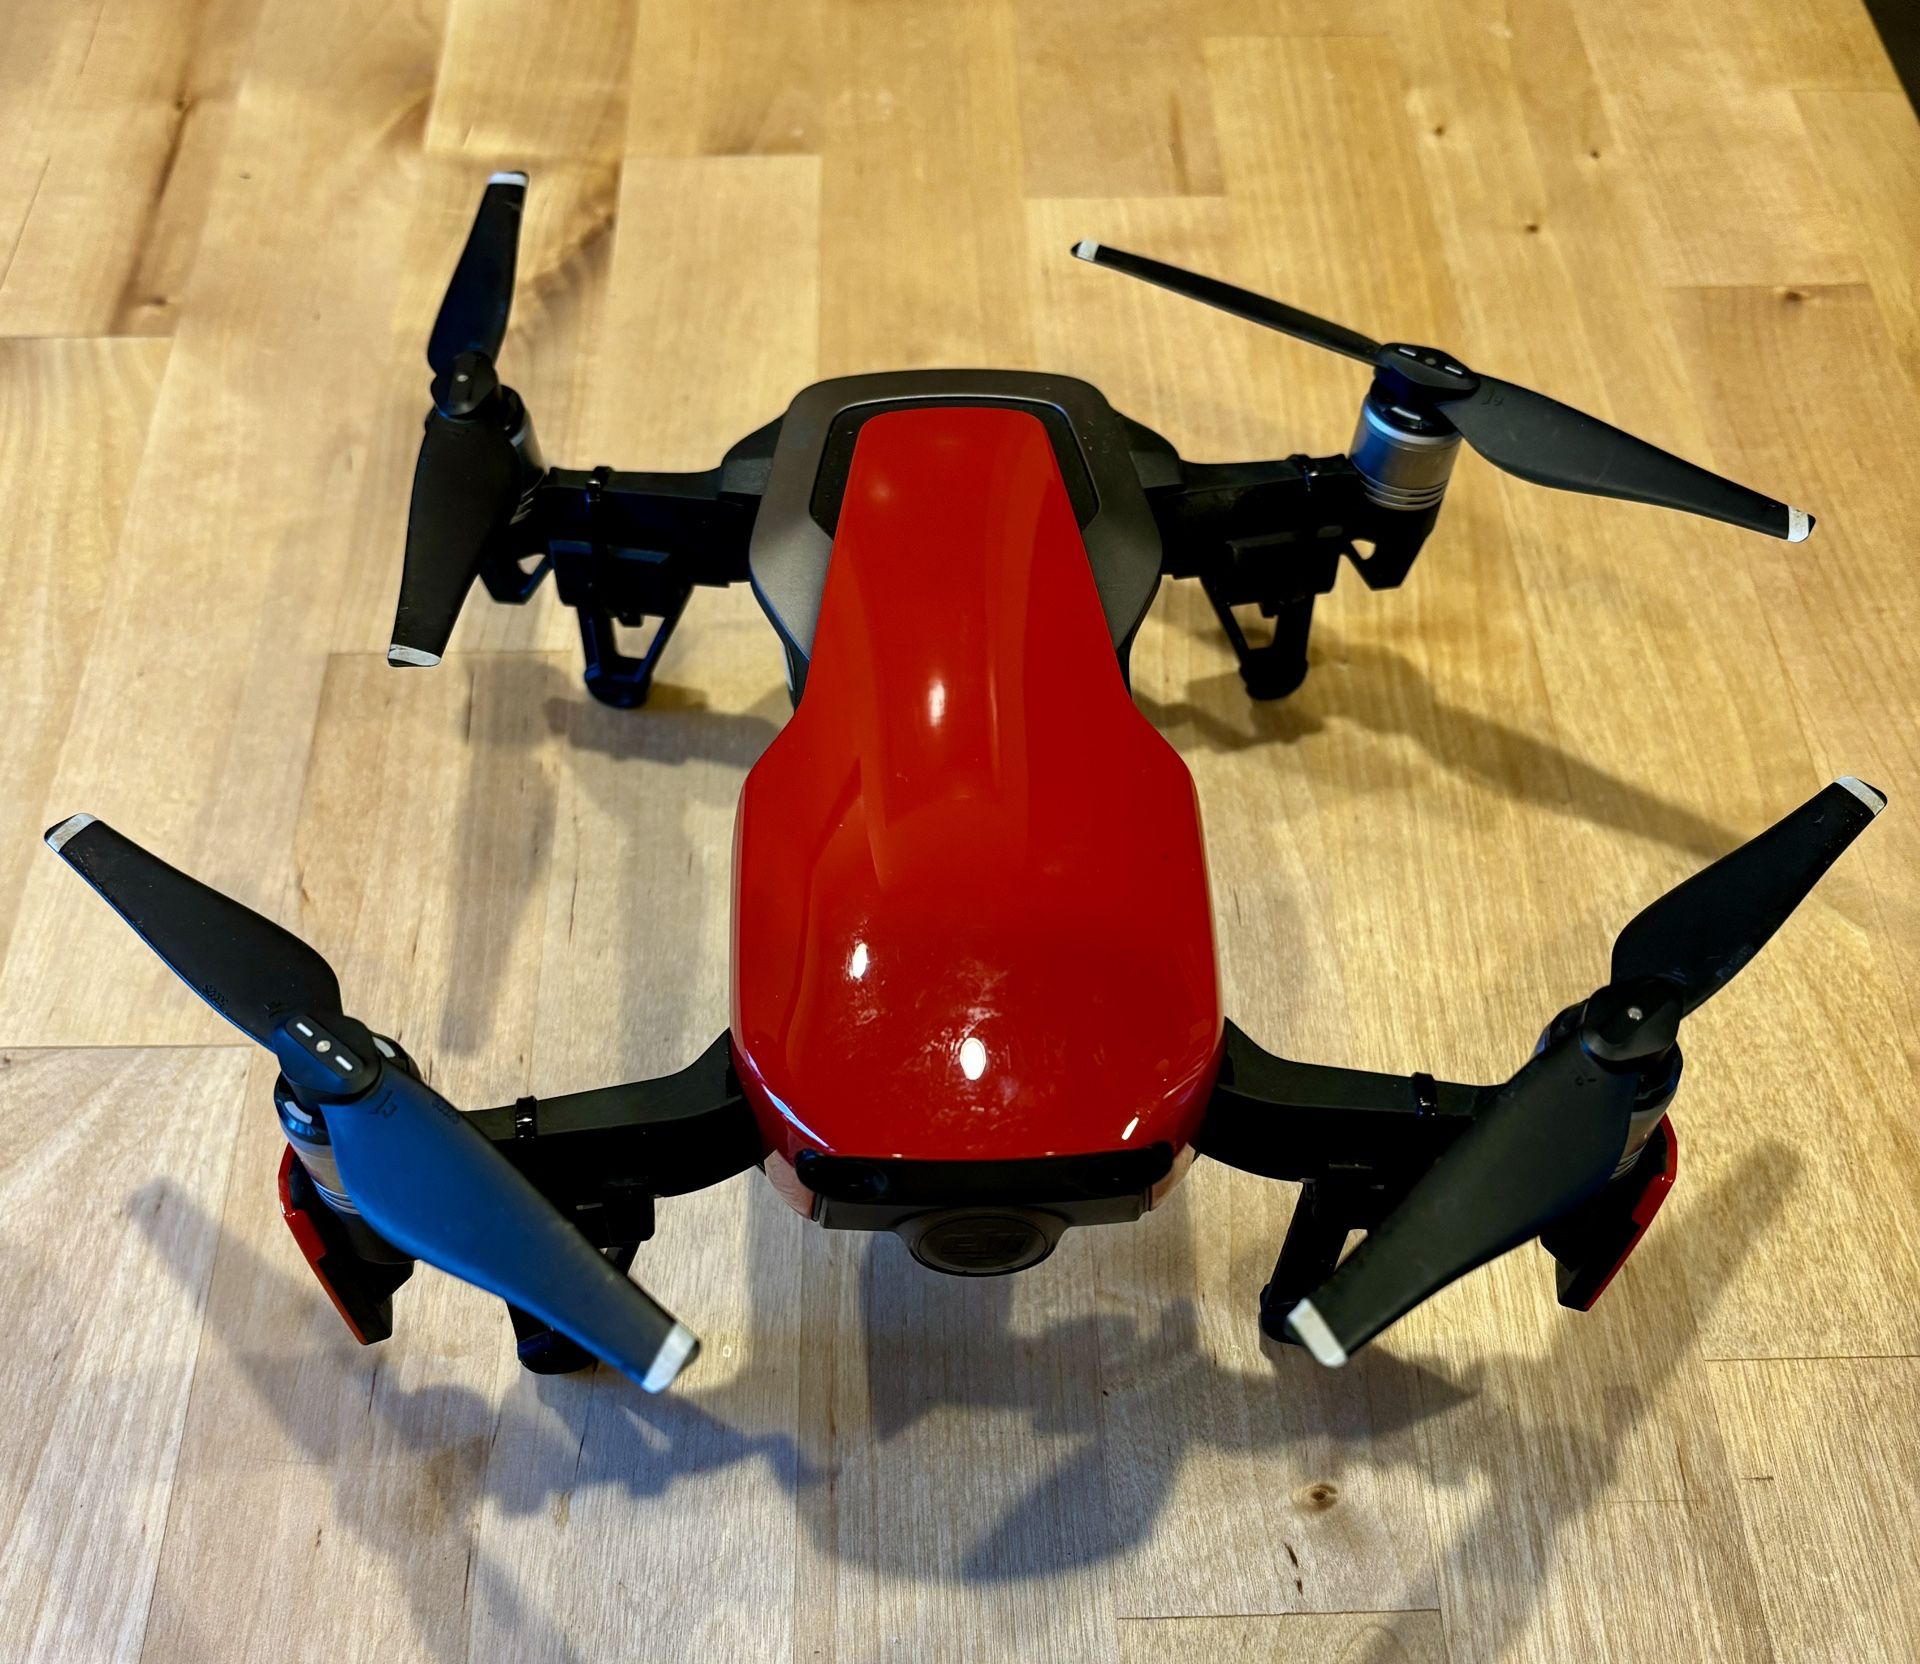 DJI Air Drone 